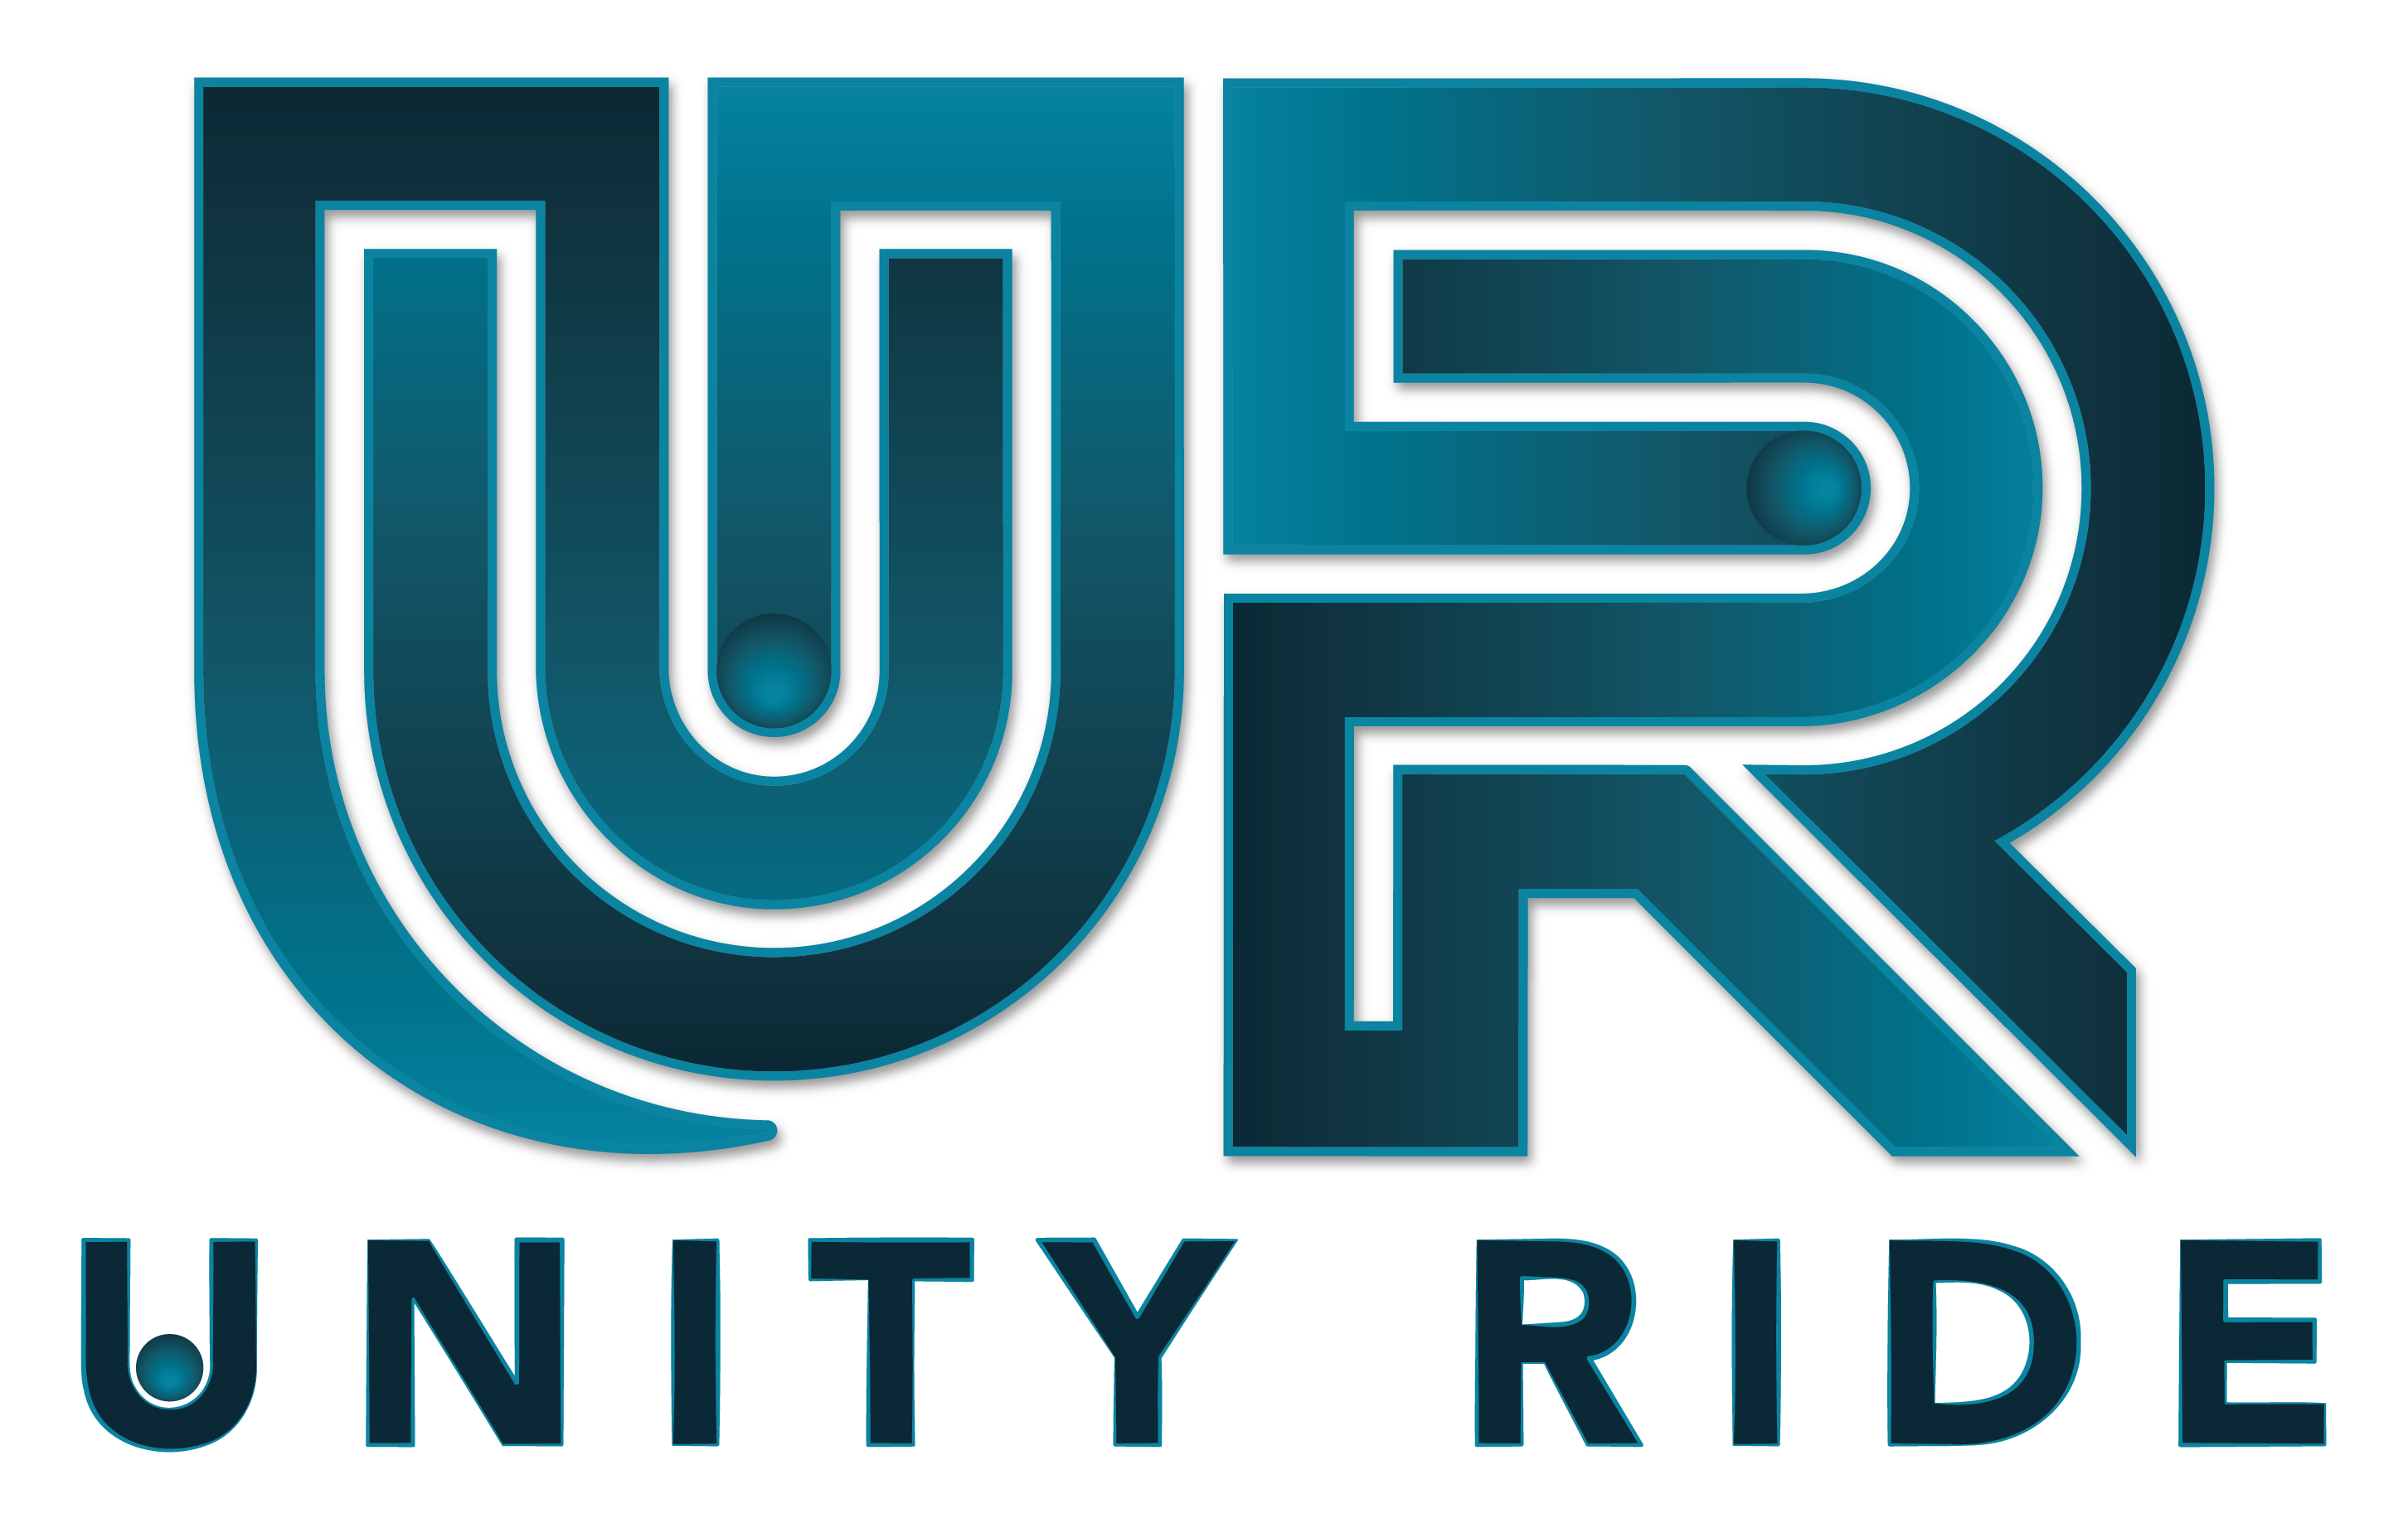 Unity Ride